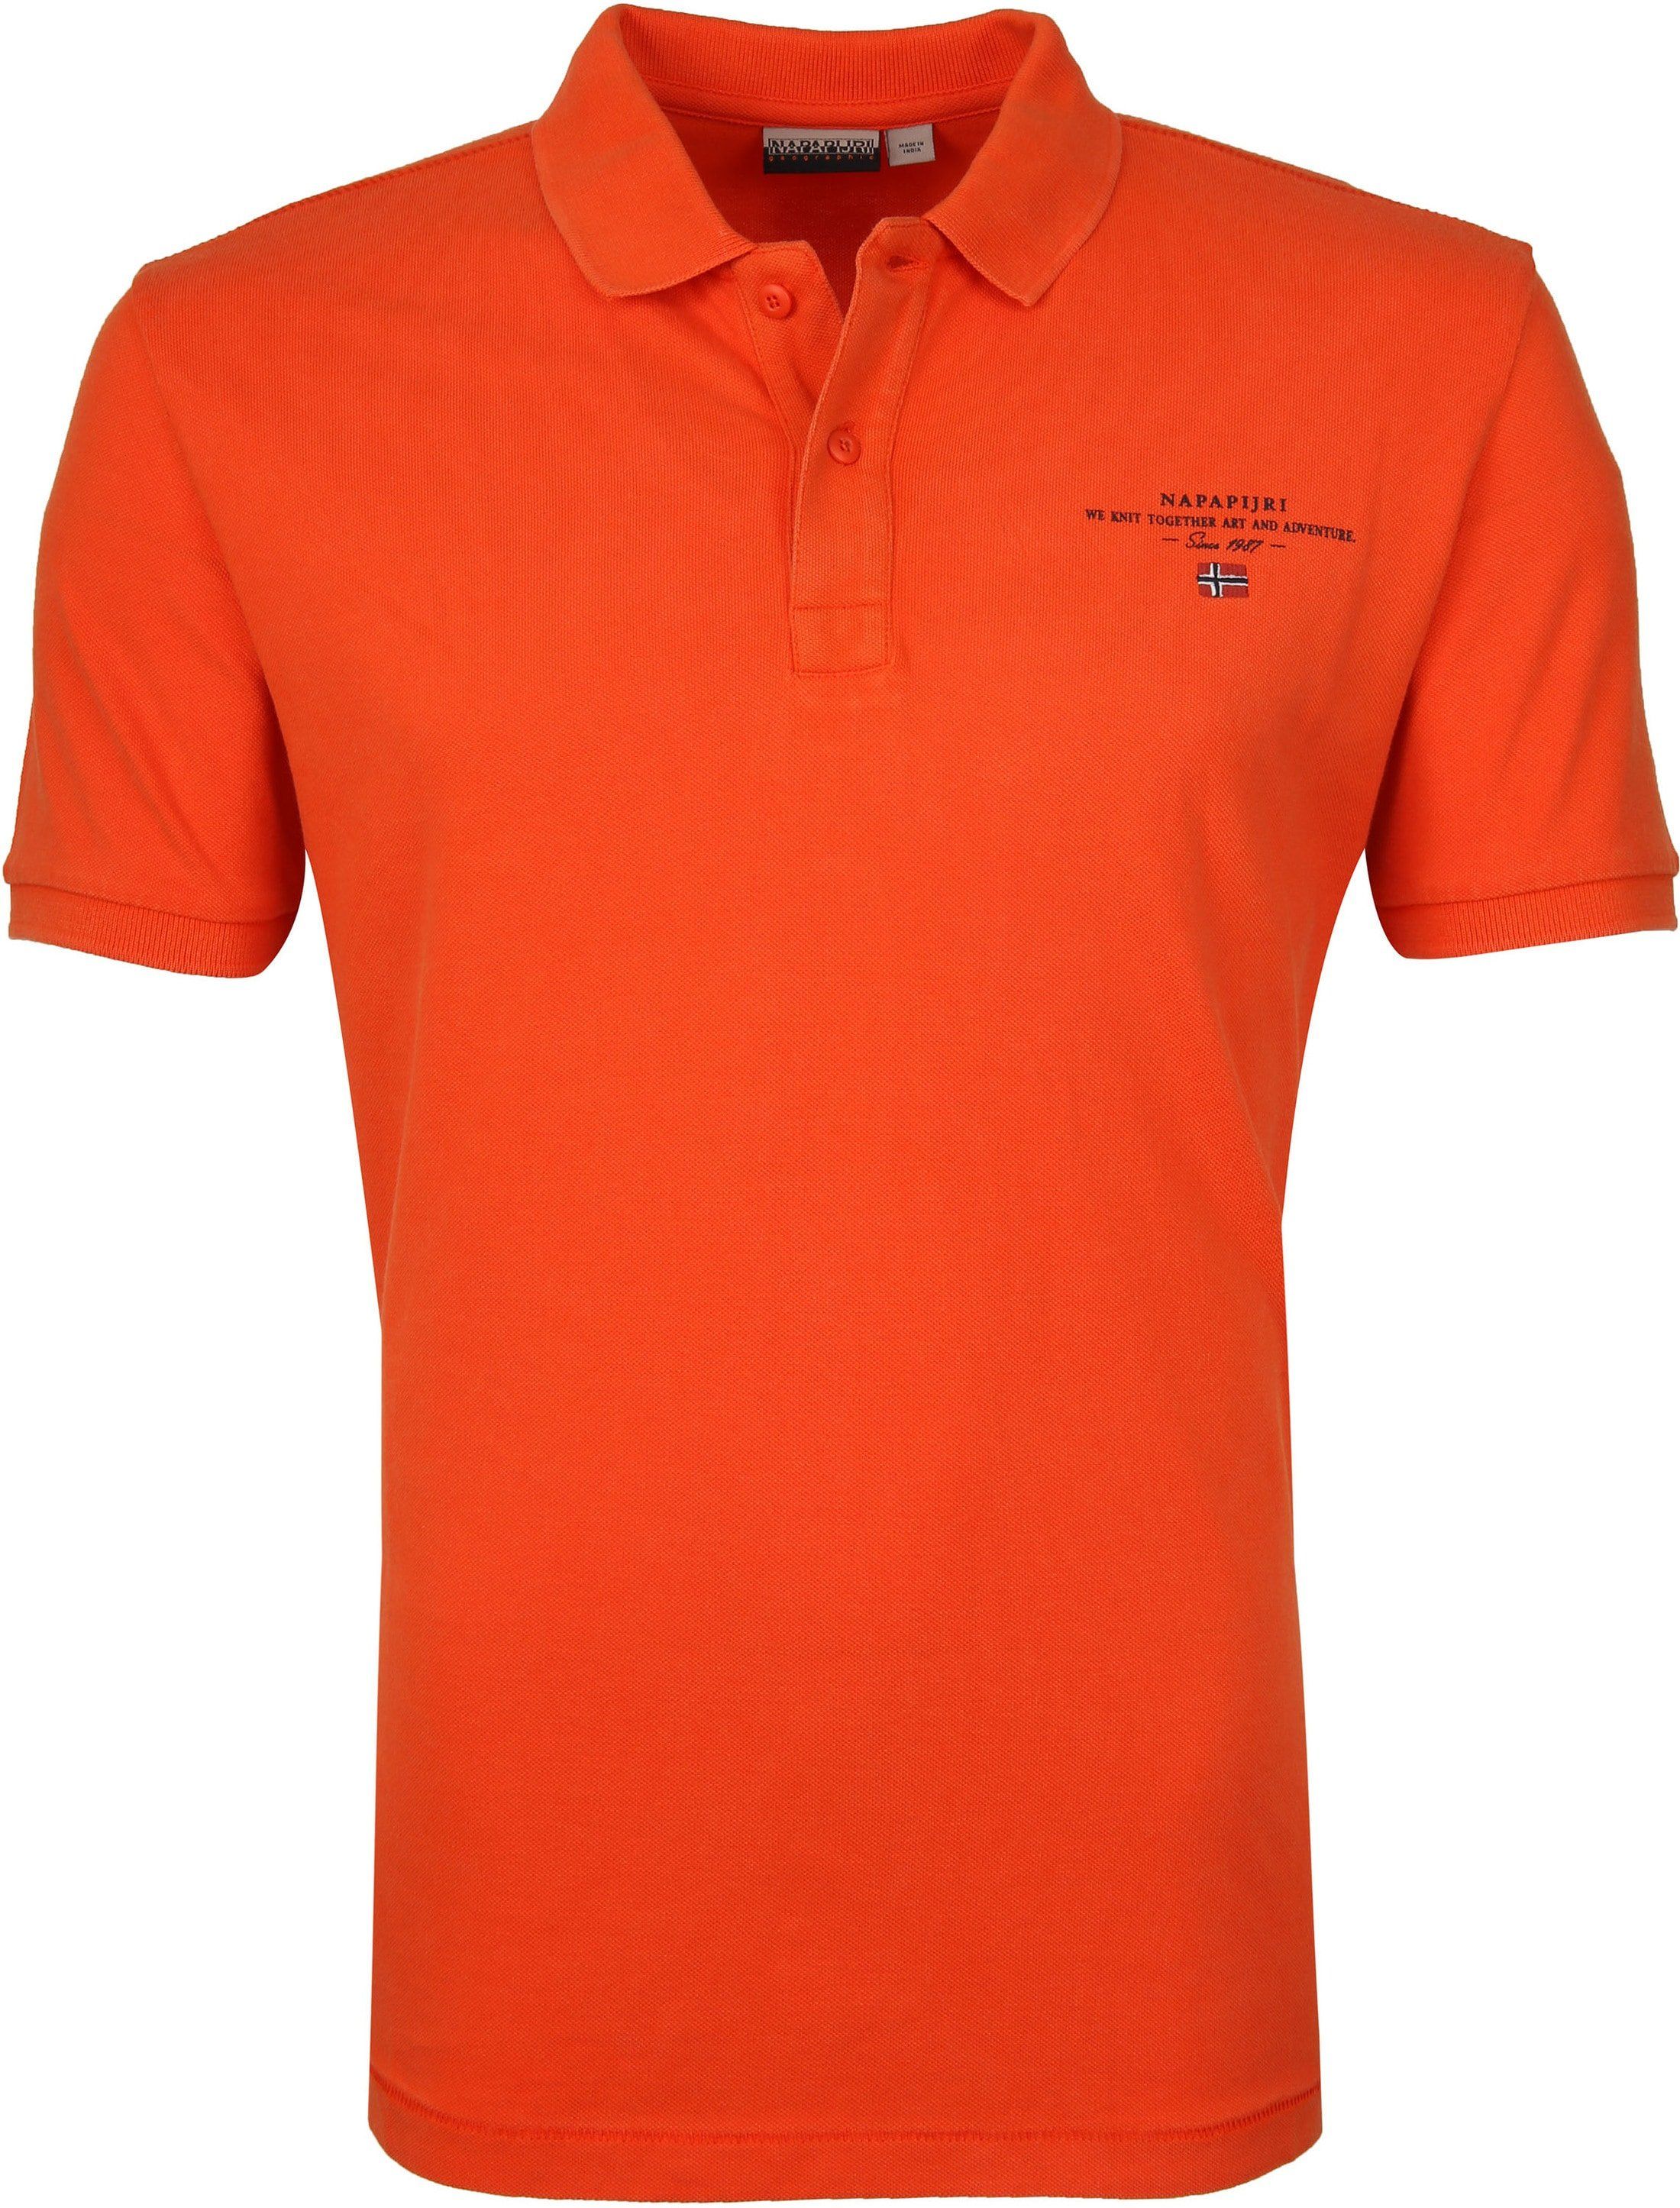 Napapijri Polo Shirt Elbas 3 Orange size L